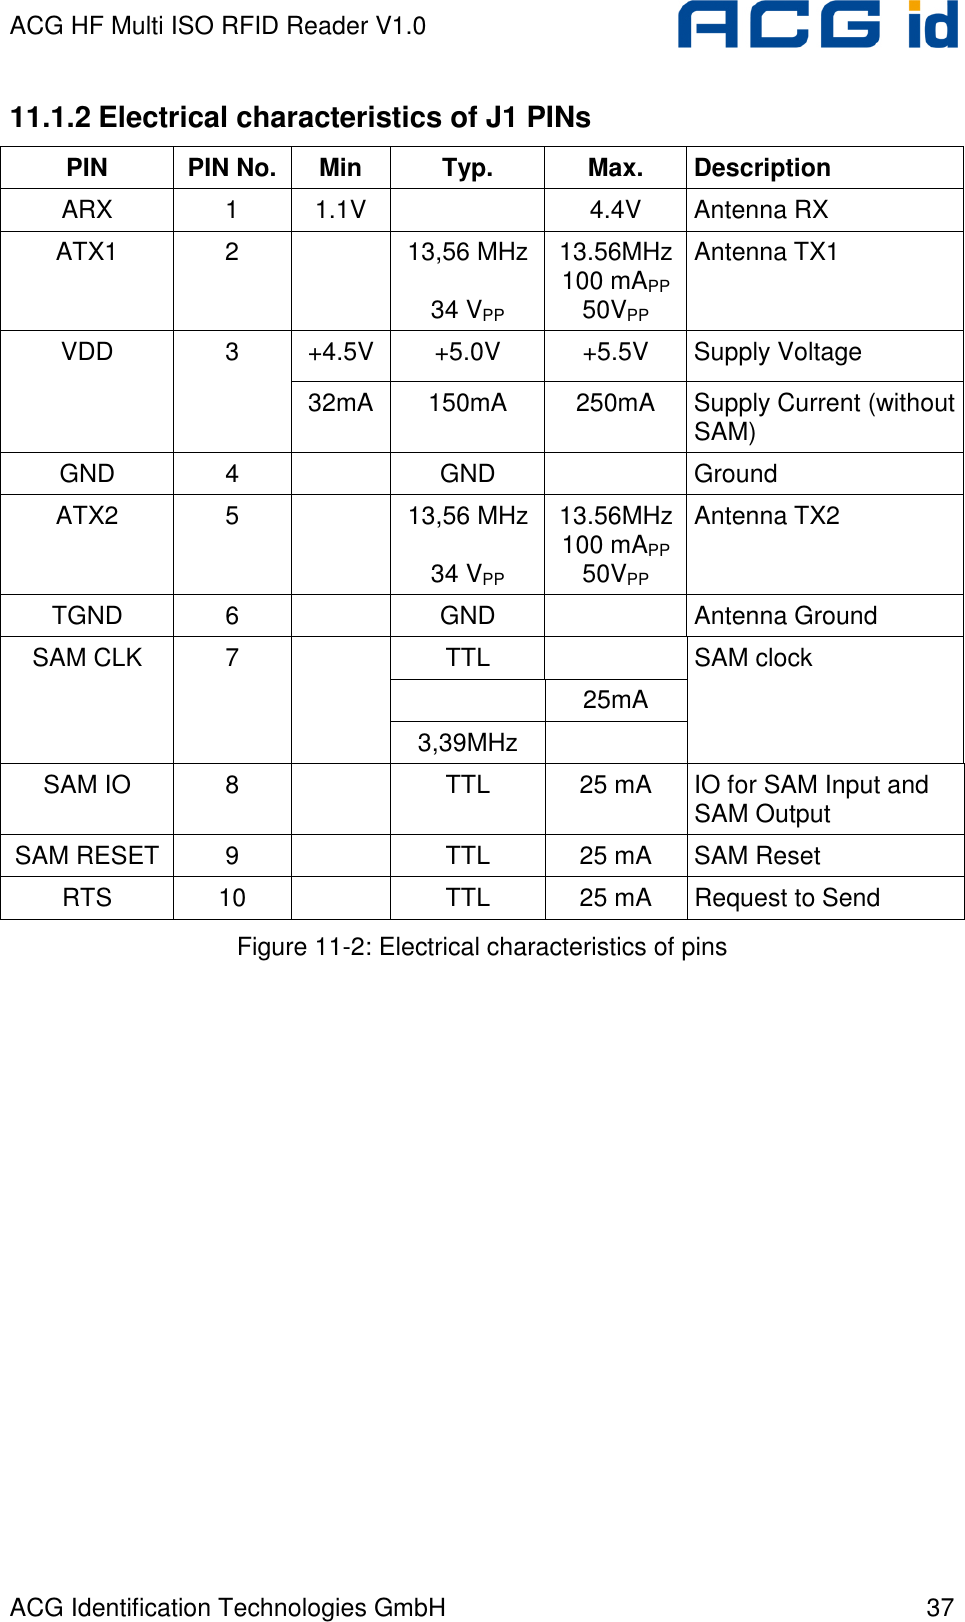 ACG HF Multi ISO RFID Reader V1.0 ACG Identification Technologies GmbH  37 11.1.2 Electrical characteristics of J1 PINs PIN  PIN No.  Min  Typ.  Max.  Description ARX  1  1.1V    4.4V  Antenna RX ATX1  2    13,56 MHz  34 VPP 13.56MHz 100 mAPP 50VPP Antenna TX1 +4.5V  +5.0V  +5.5V  Supply Voltage VDD  3 32mA  150mA  250mA  Supply Current (without SAM) GND  4    GND    Ground ATX2  5    13,56 MHz  34 VPP 13.56MHz 100 mAPP 50VPP Antenna TX2 TGND  6    GND    Antenna Ground TTL     25mA SAM CLK  7   3,39MHz   SAM clock SAM IO  8    TTL  25 mA  IO for SAM Input and SAM Output SAM RESET  9    TTL  25 mA  SAM Reset RTS  10    TTL  25 mA  Request to Send Figure 11-2: Electrical characteristics of pins 